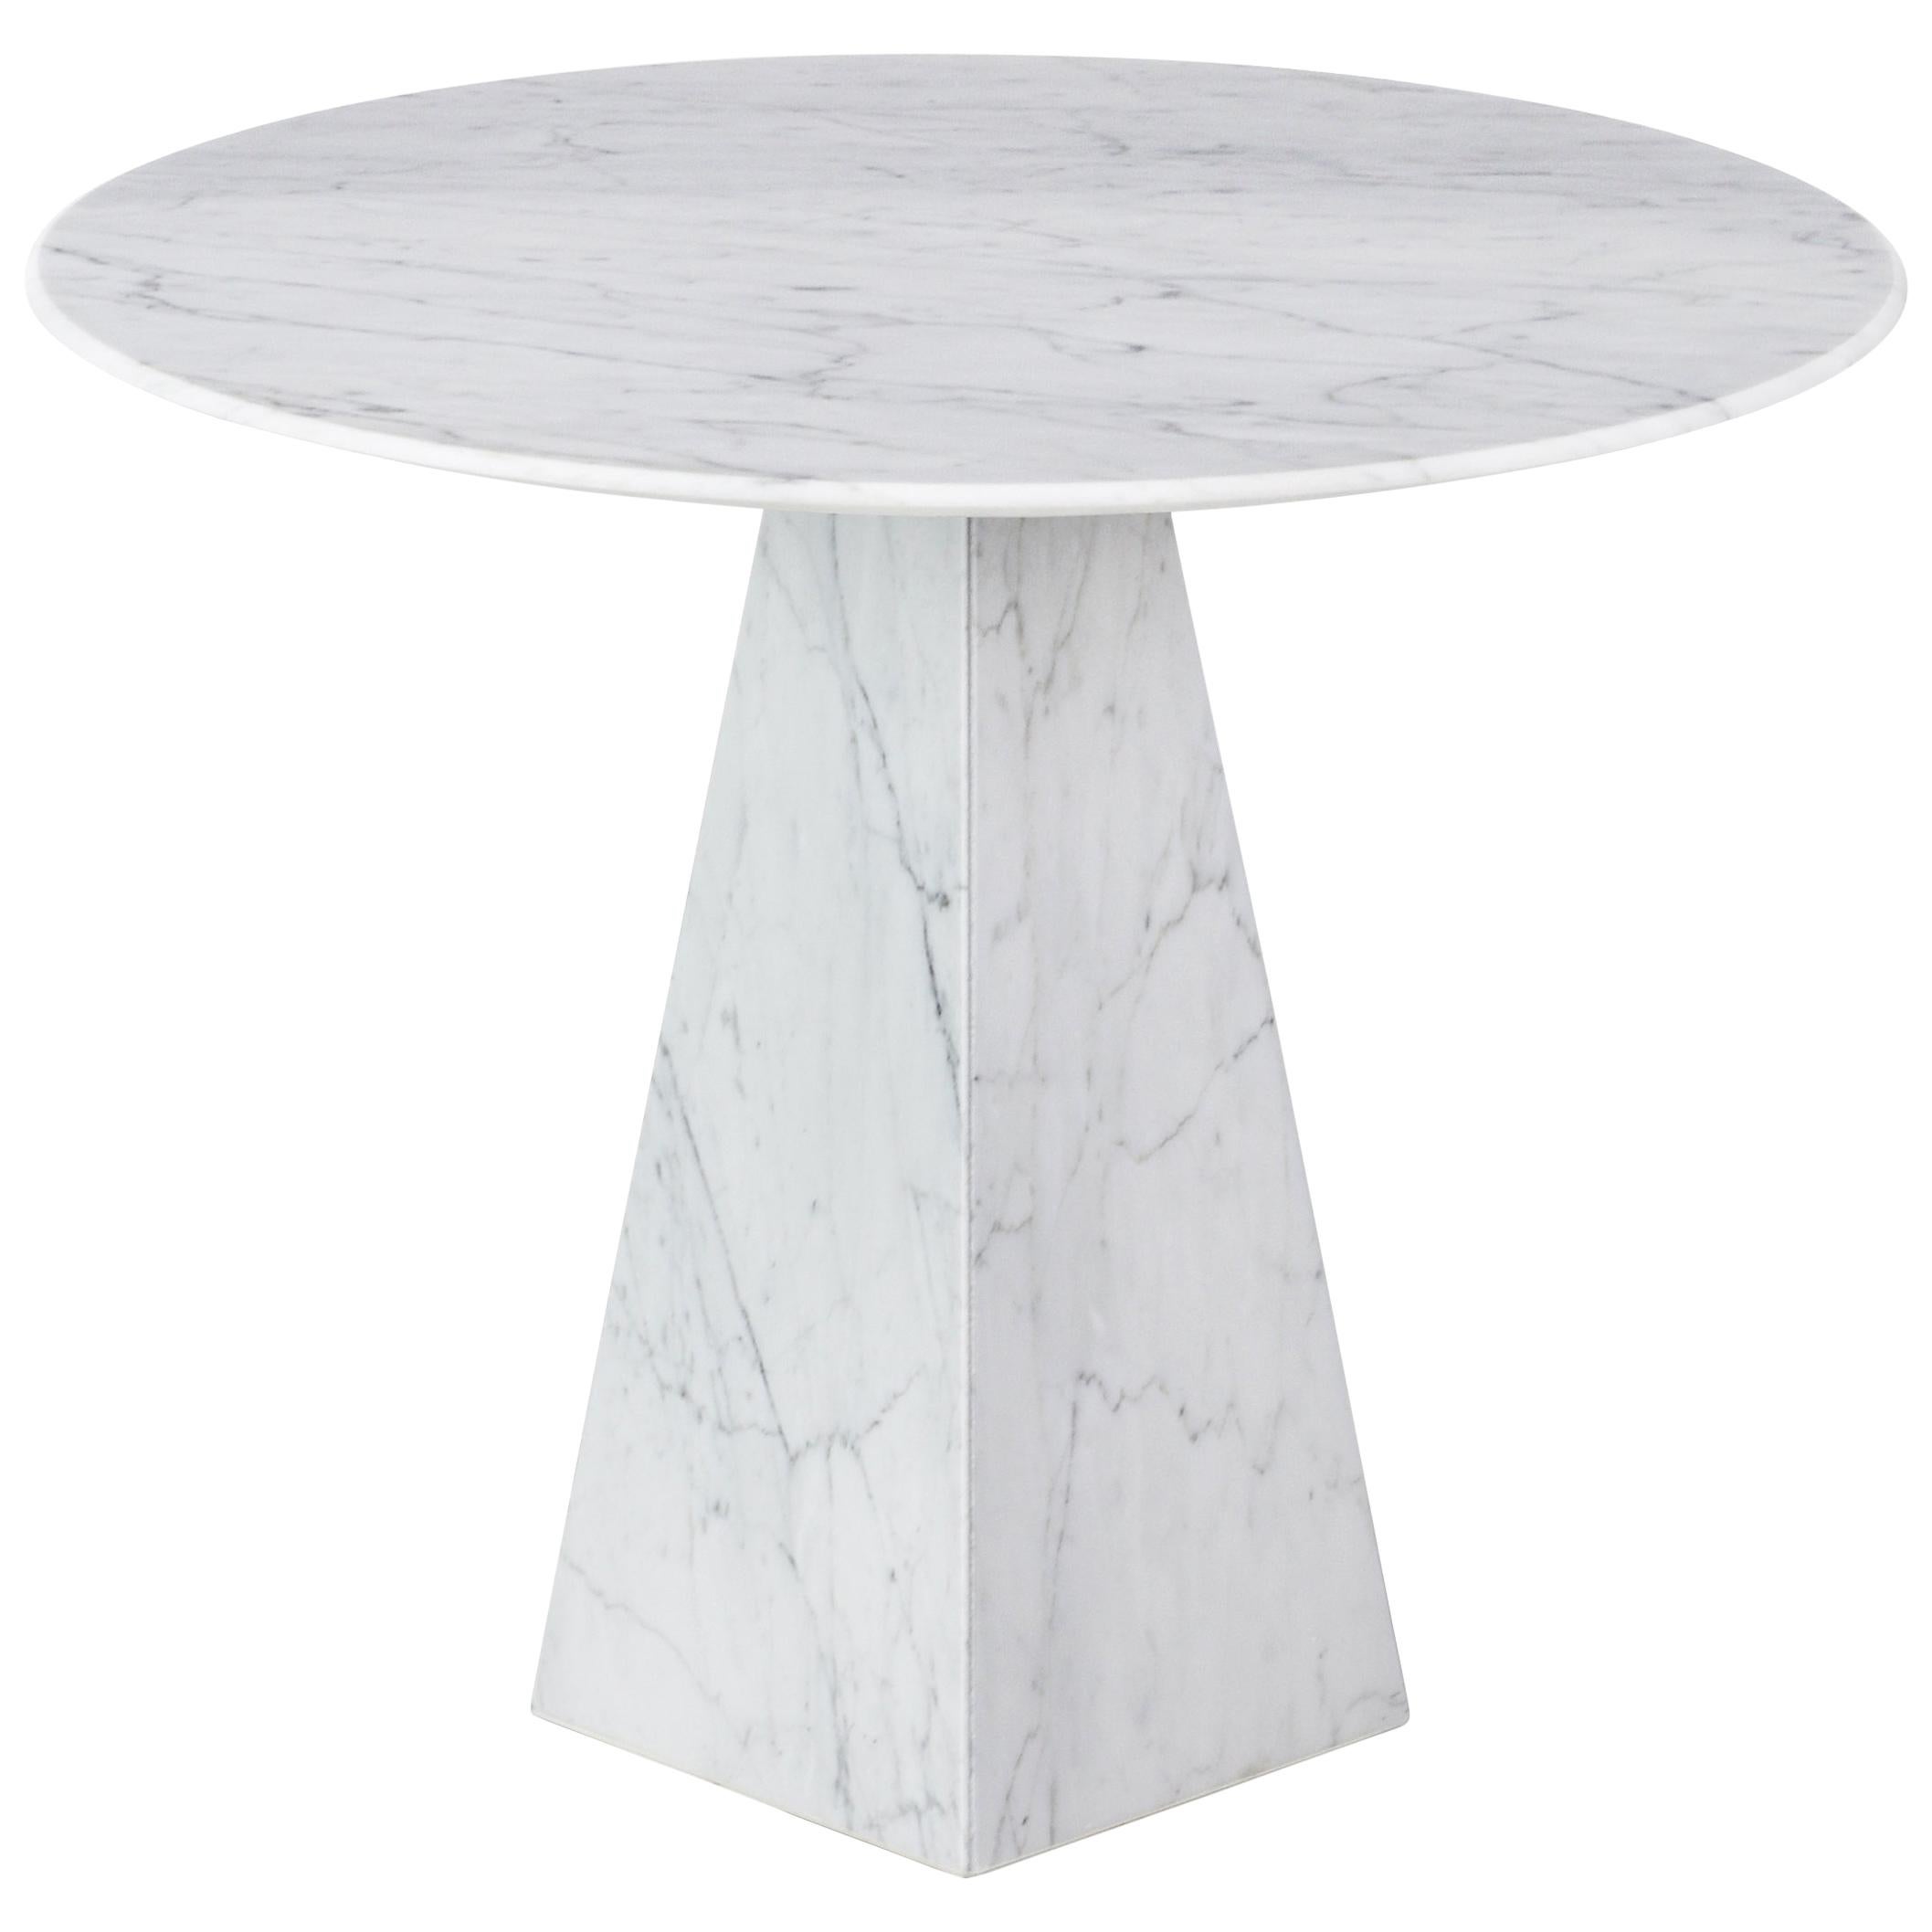 Pair of Ultra Thin White Carrara Marble Round Sidetable